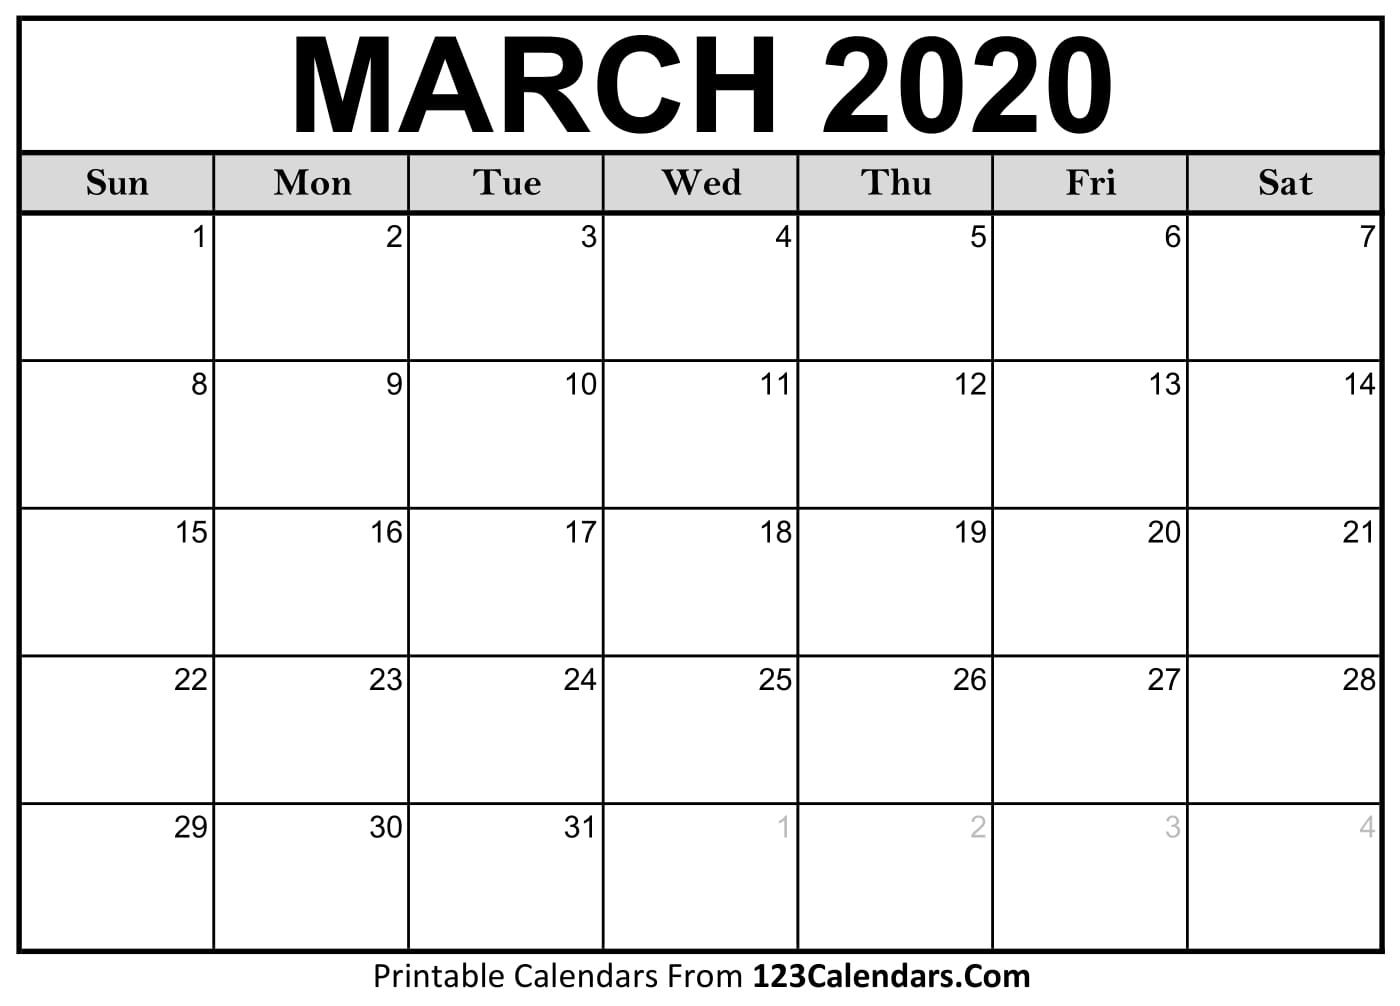 march-2020-printable-calendar-123calendars